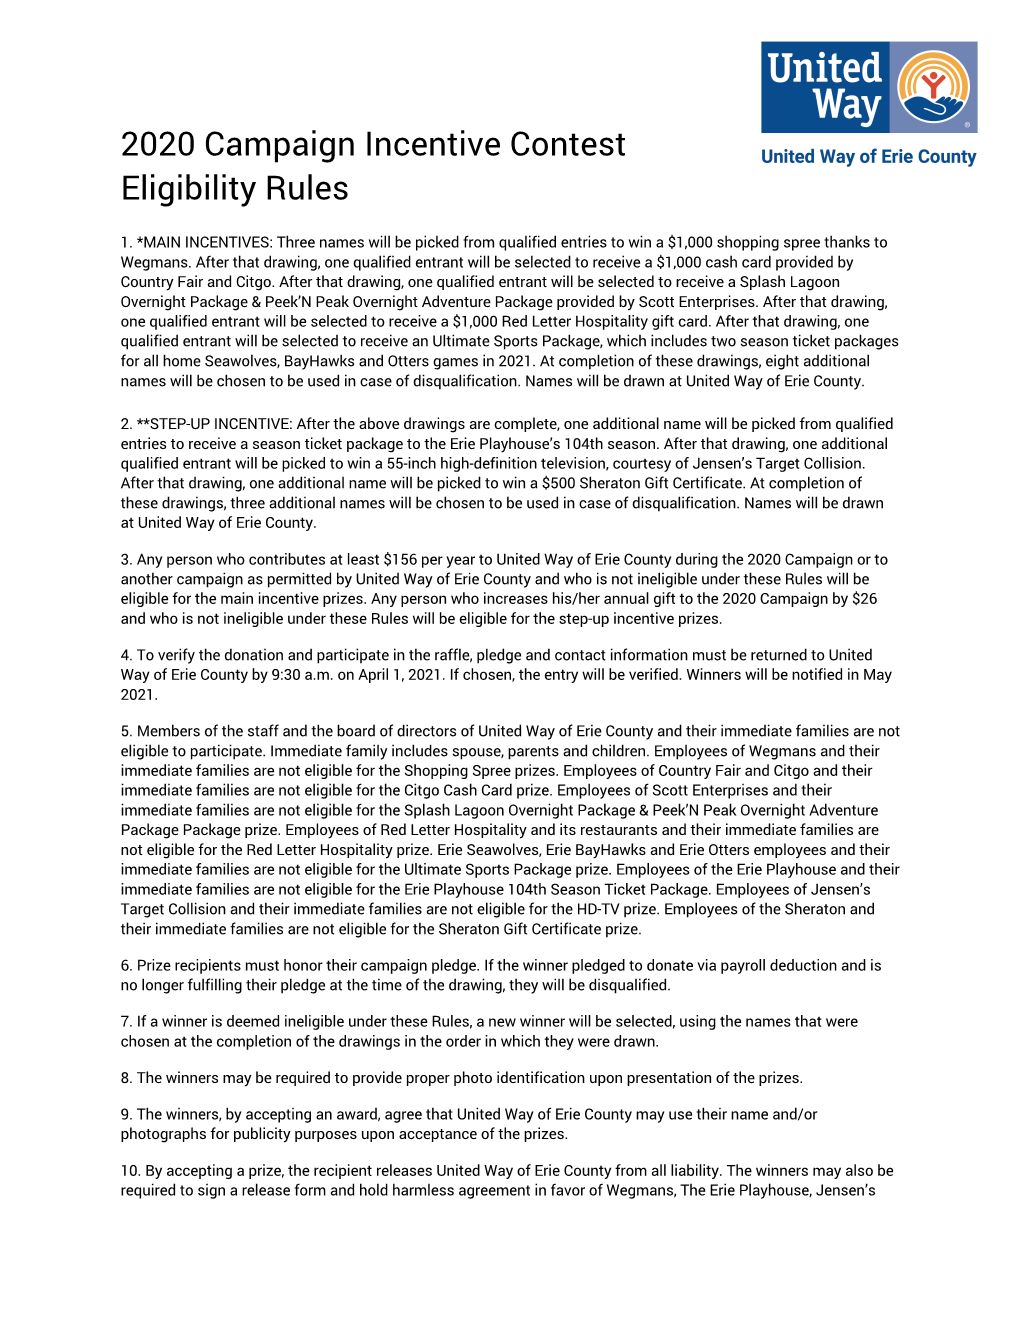 2020 Campaign Incentive Contest Eligibility Rules